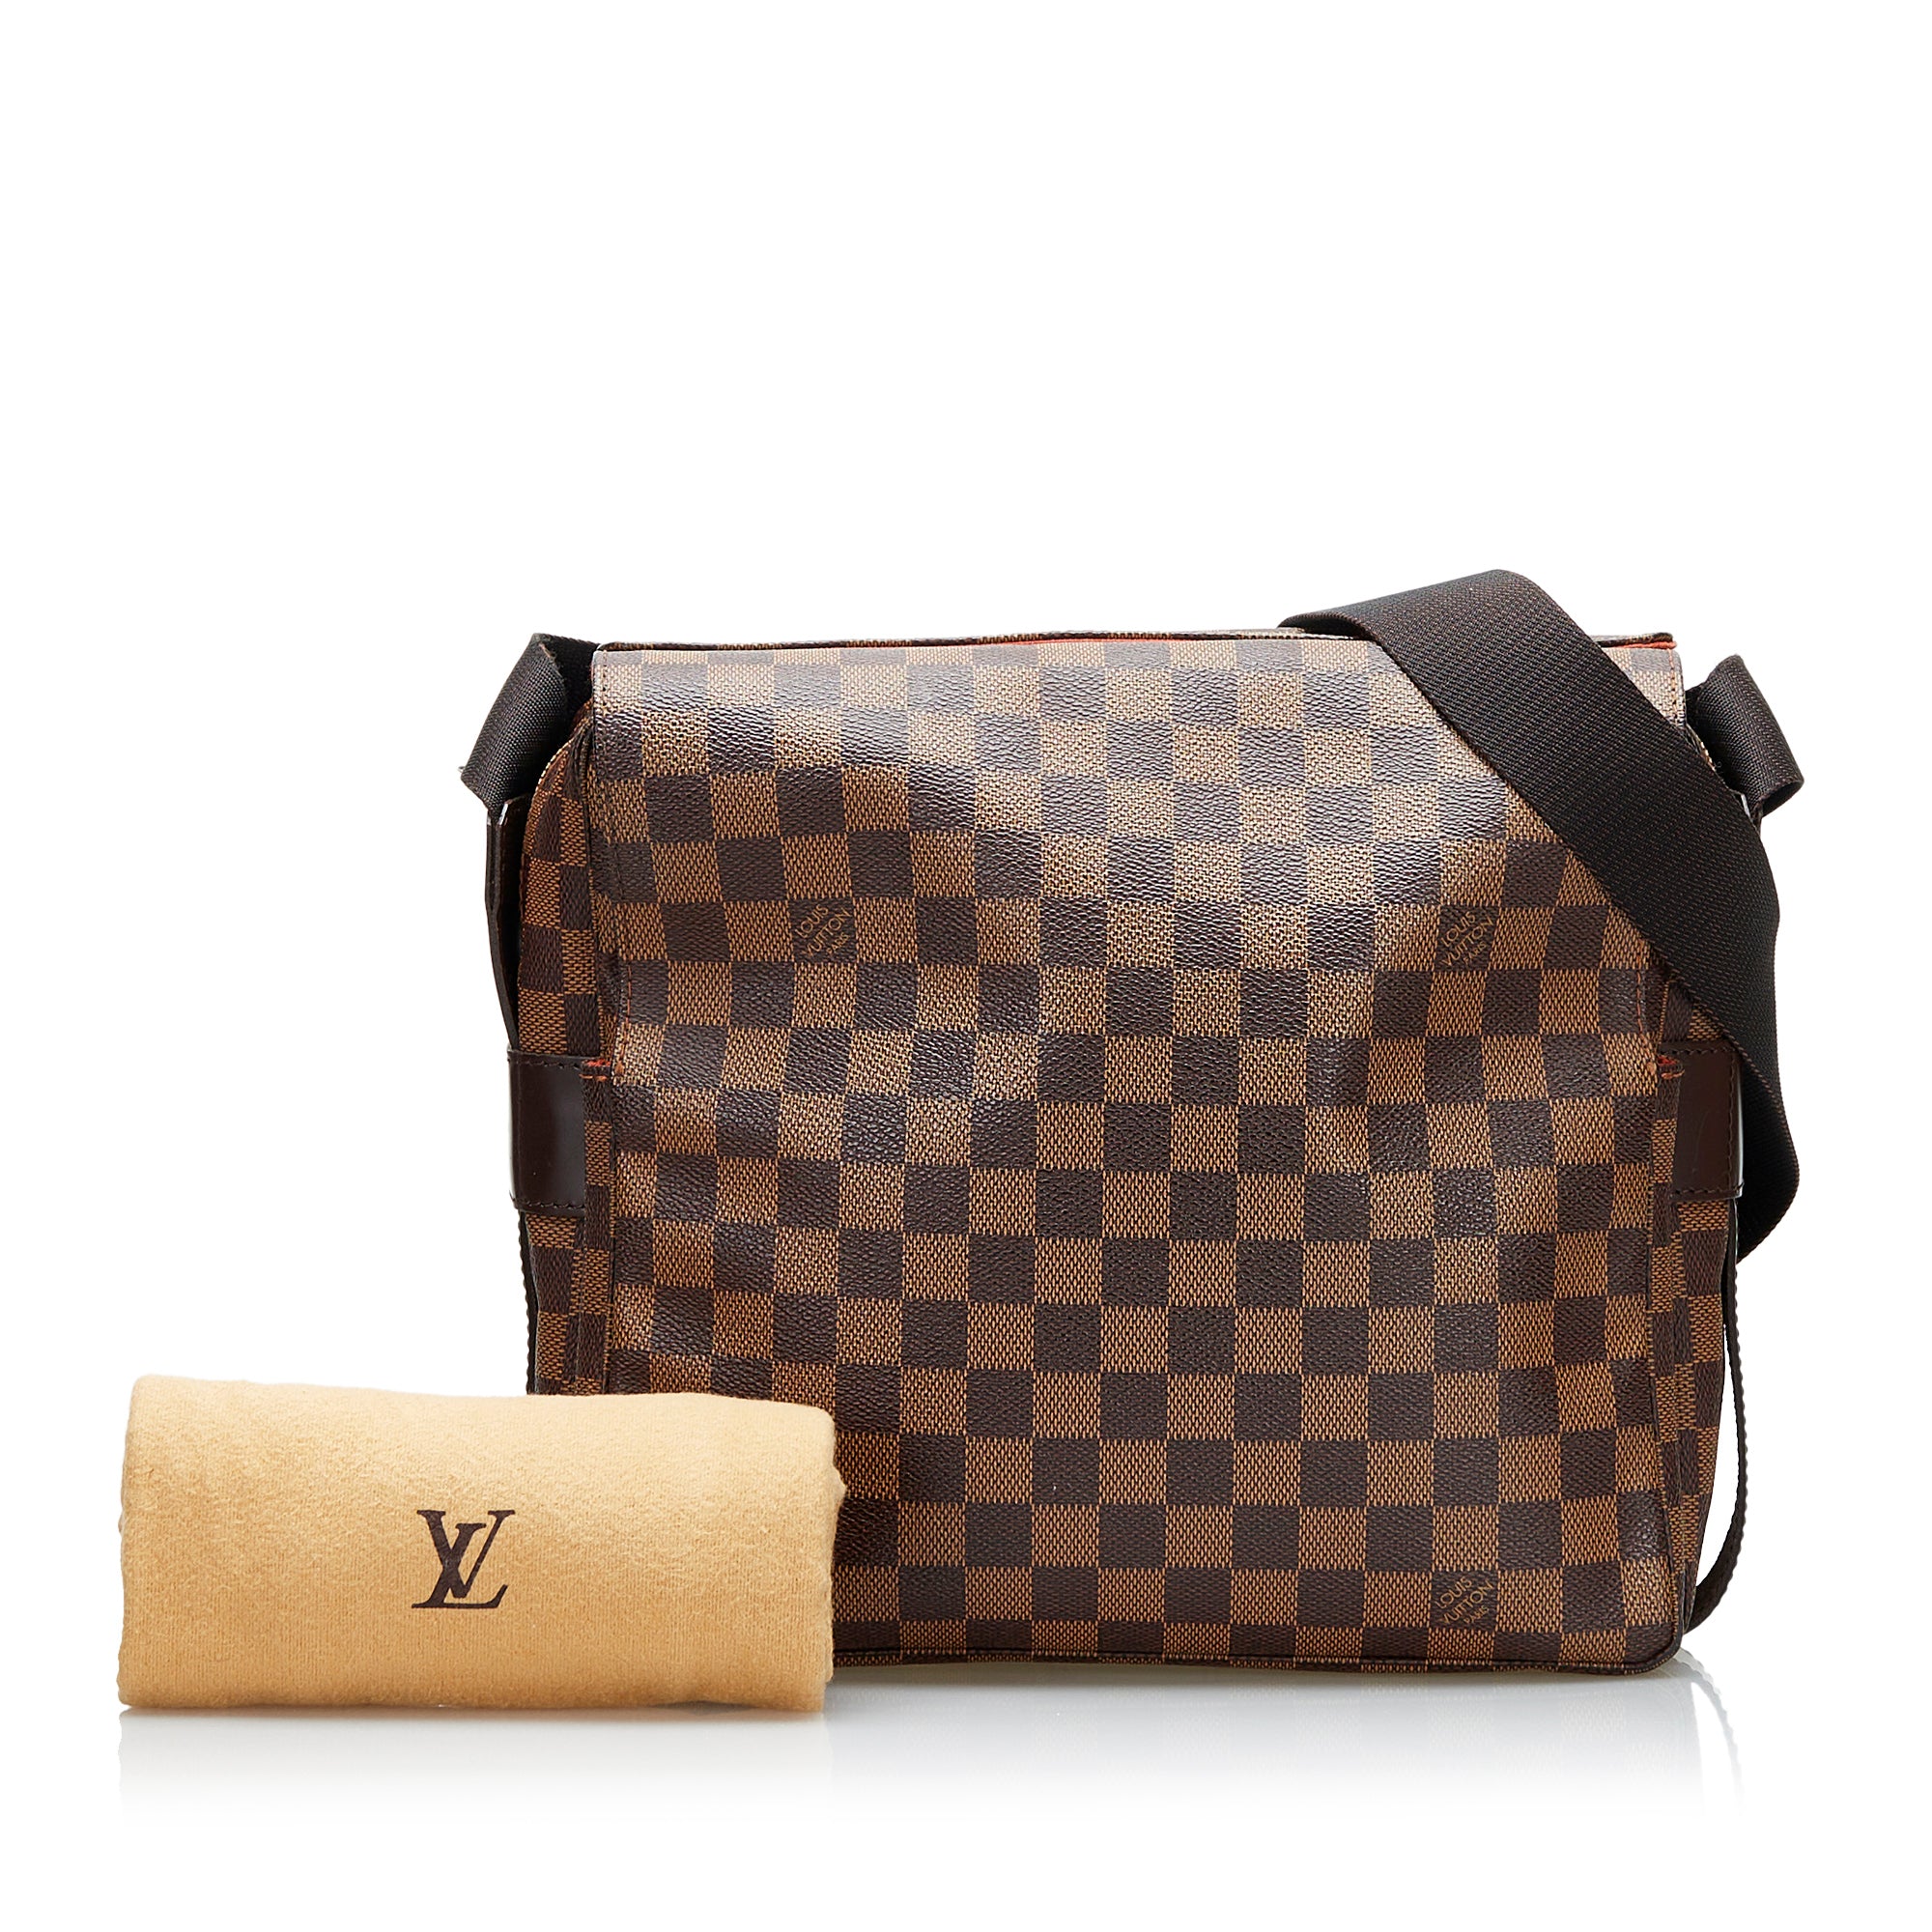 Louis Vuitton Pre-owned Damier Ebene Trevi PM Handbag